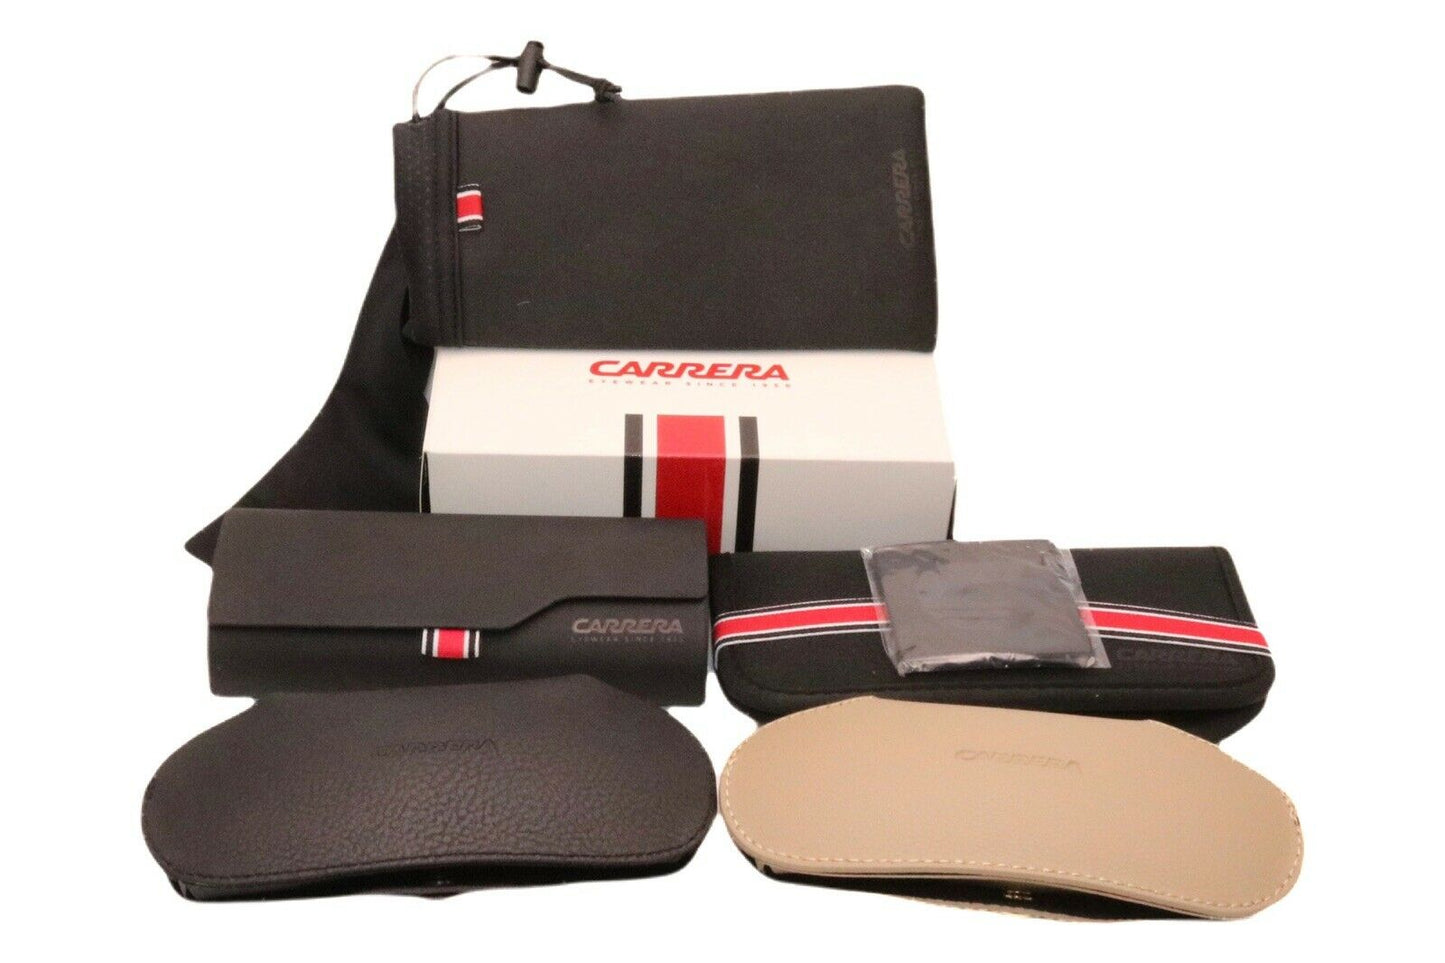 Carrera CARRERA 8884 04NZ 57 57mm New Eyeglasses